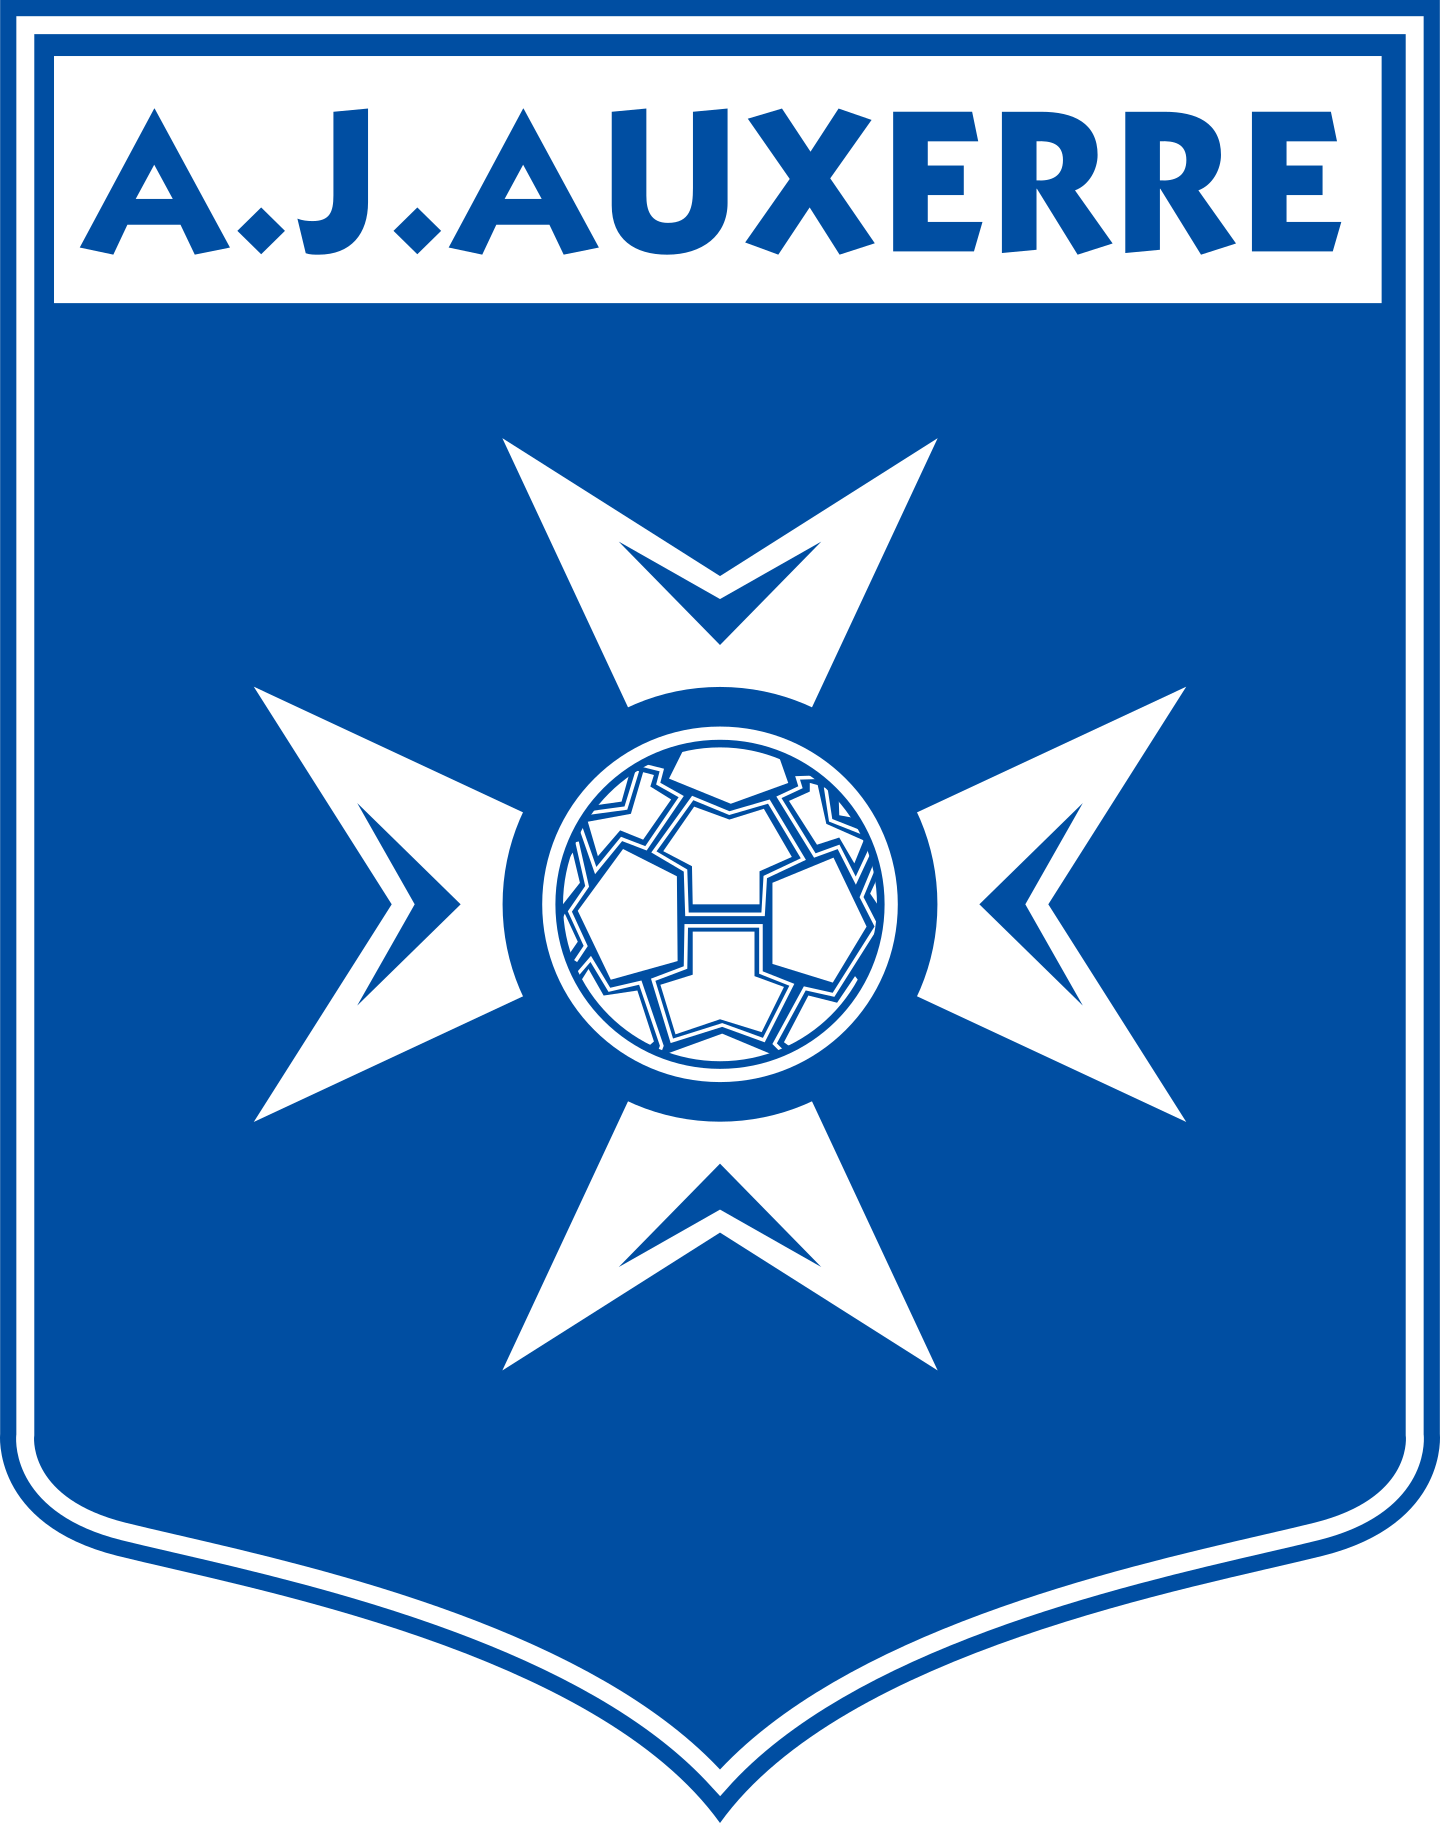 aj auxerre logo 2 - AJ Auxerre Logo